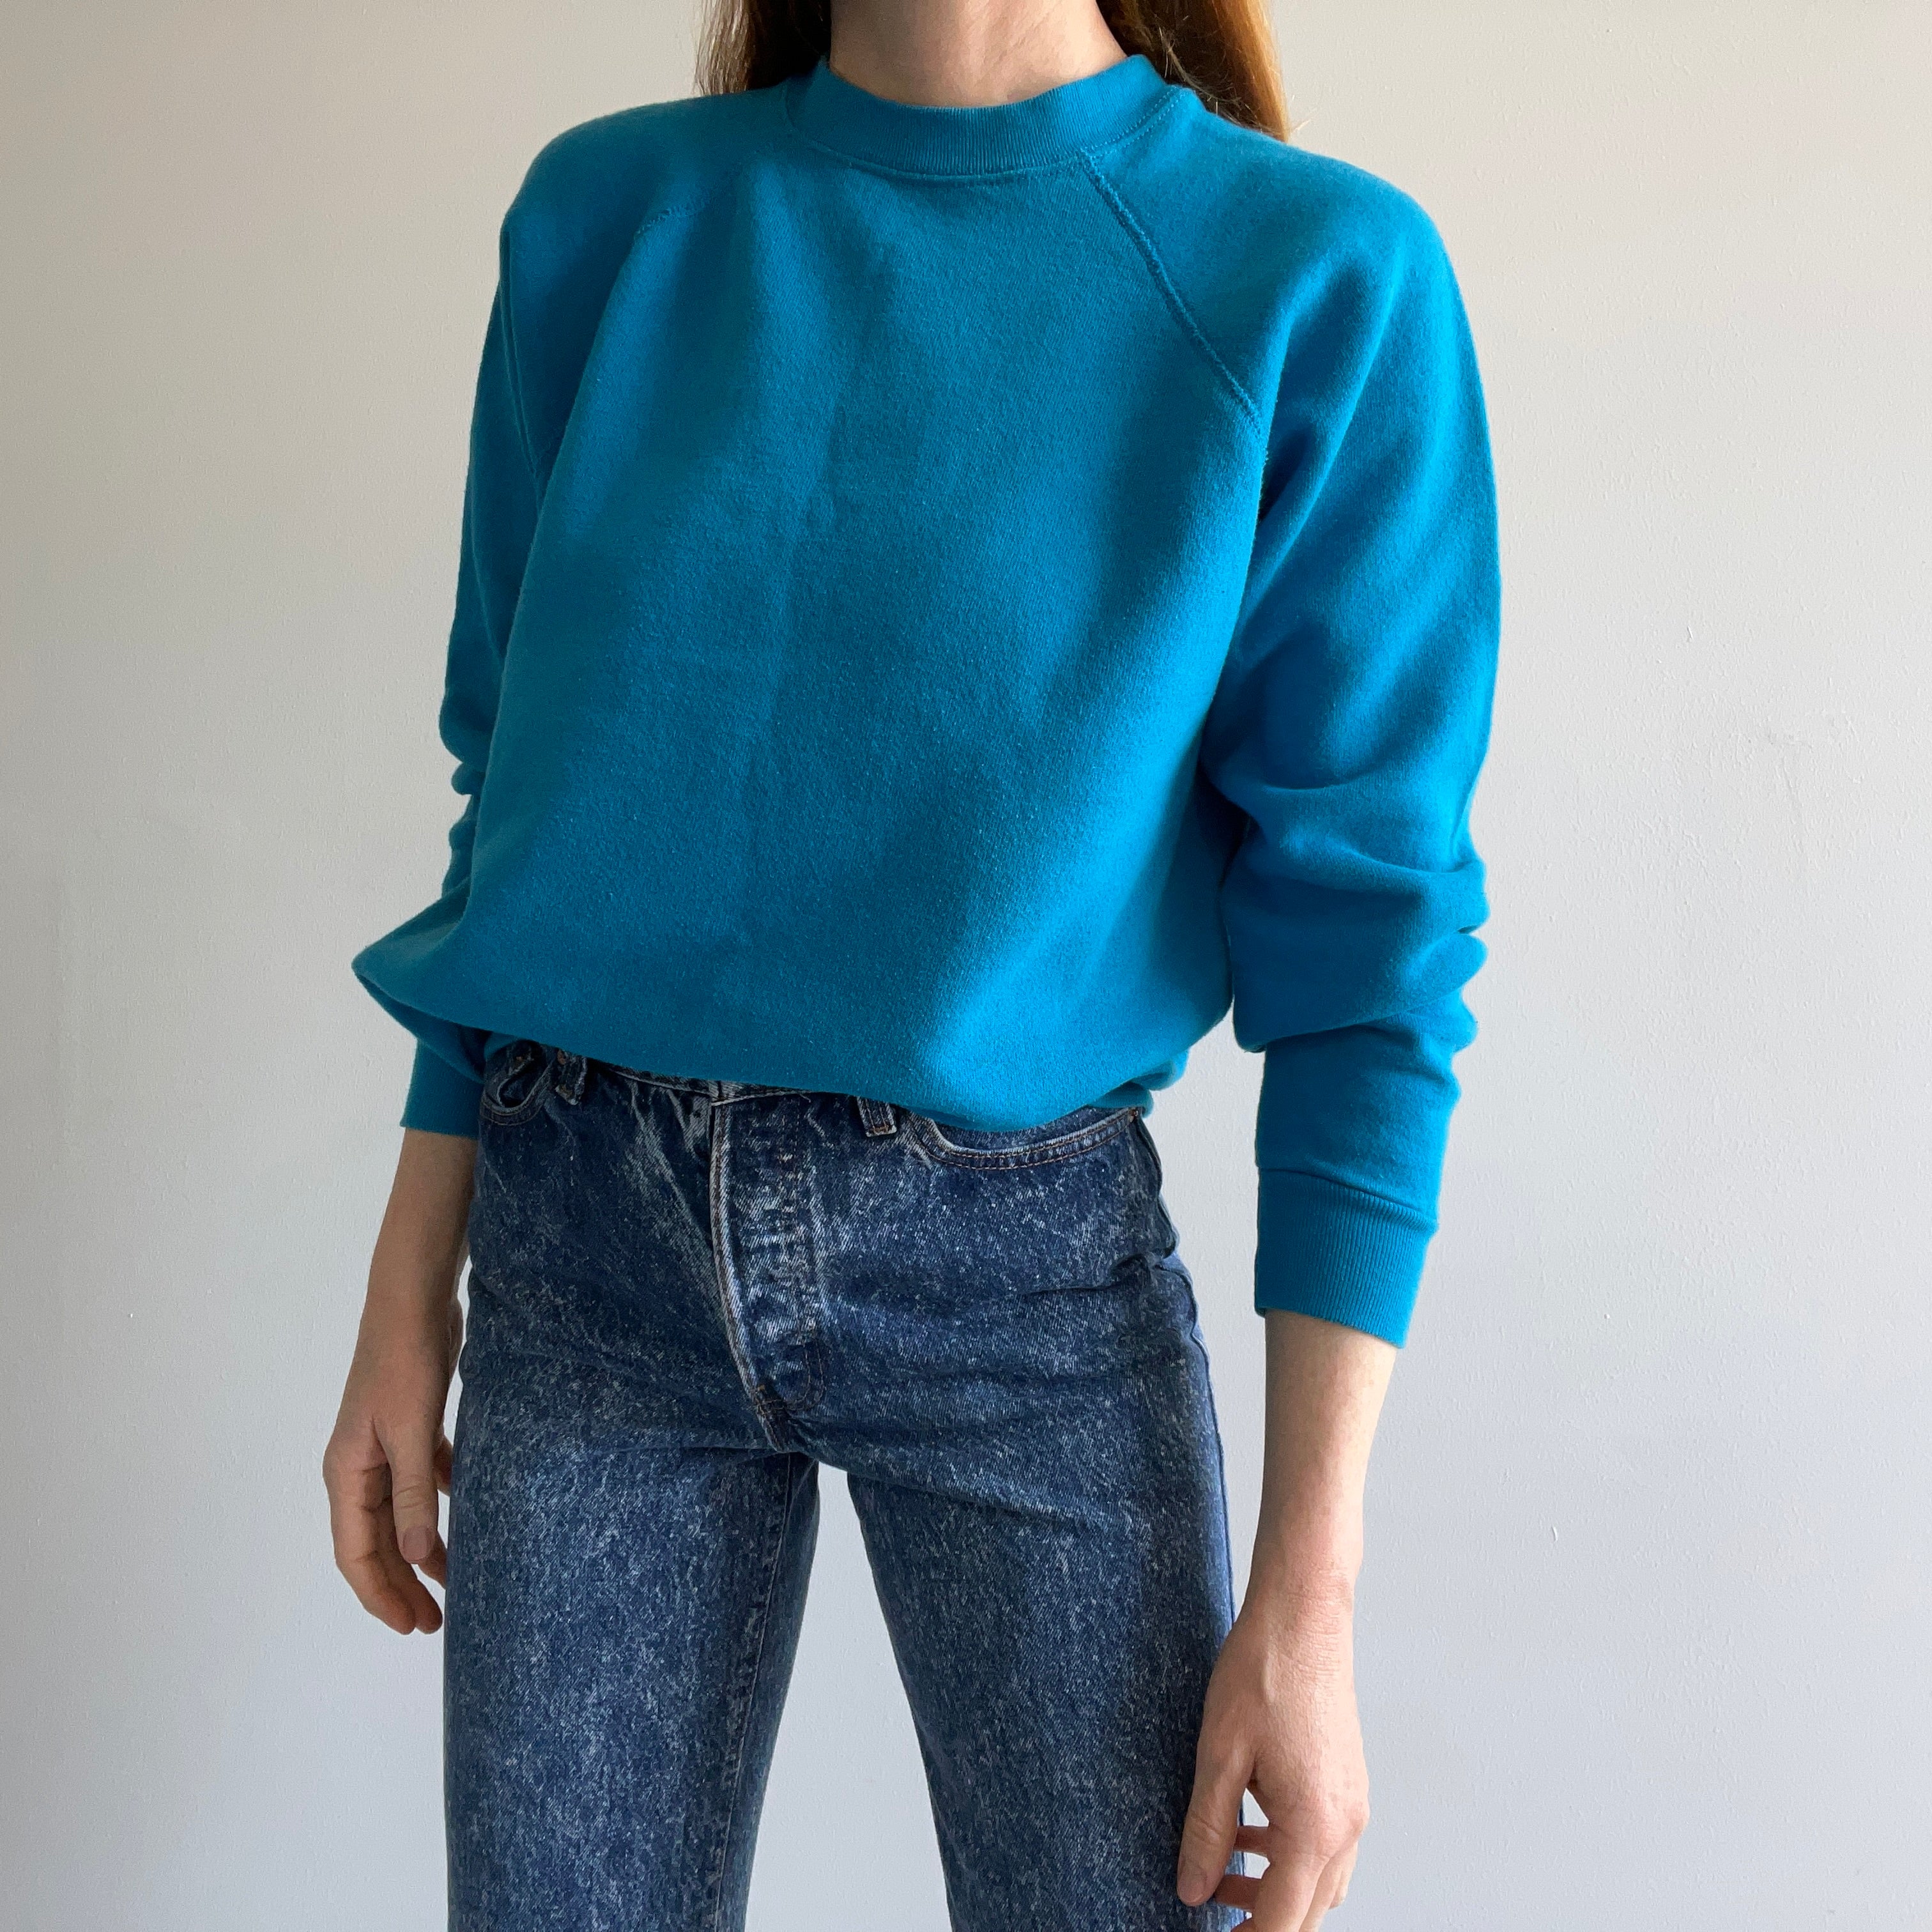 1980/90s Turquoise/Teal/Blue Blank Raglan Sweatshirt by Tultex